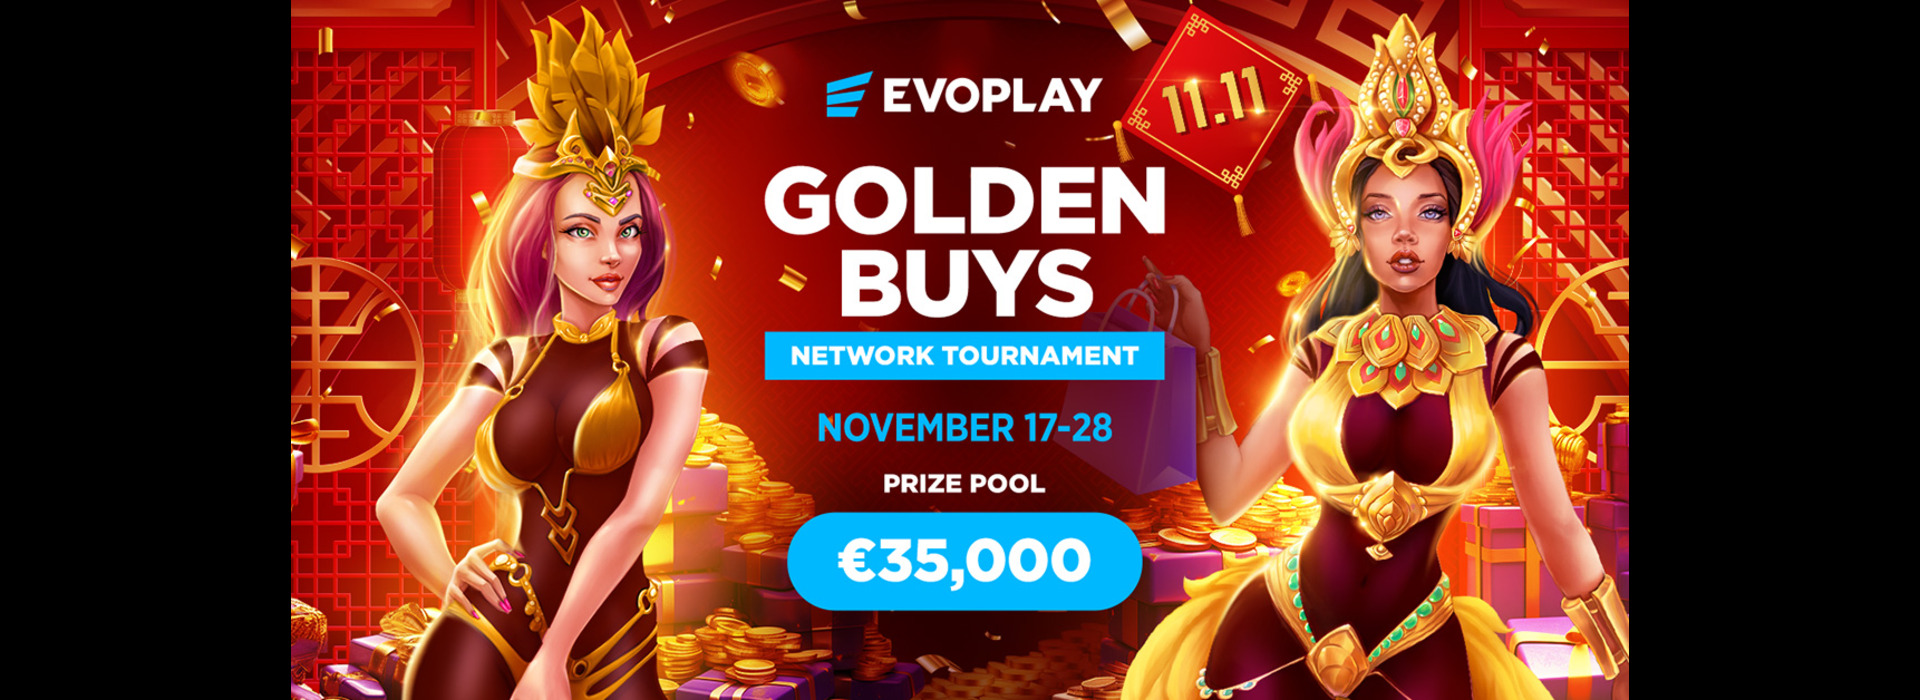 Evoplay ⻩金购买网络锦标赛